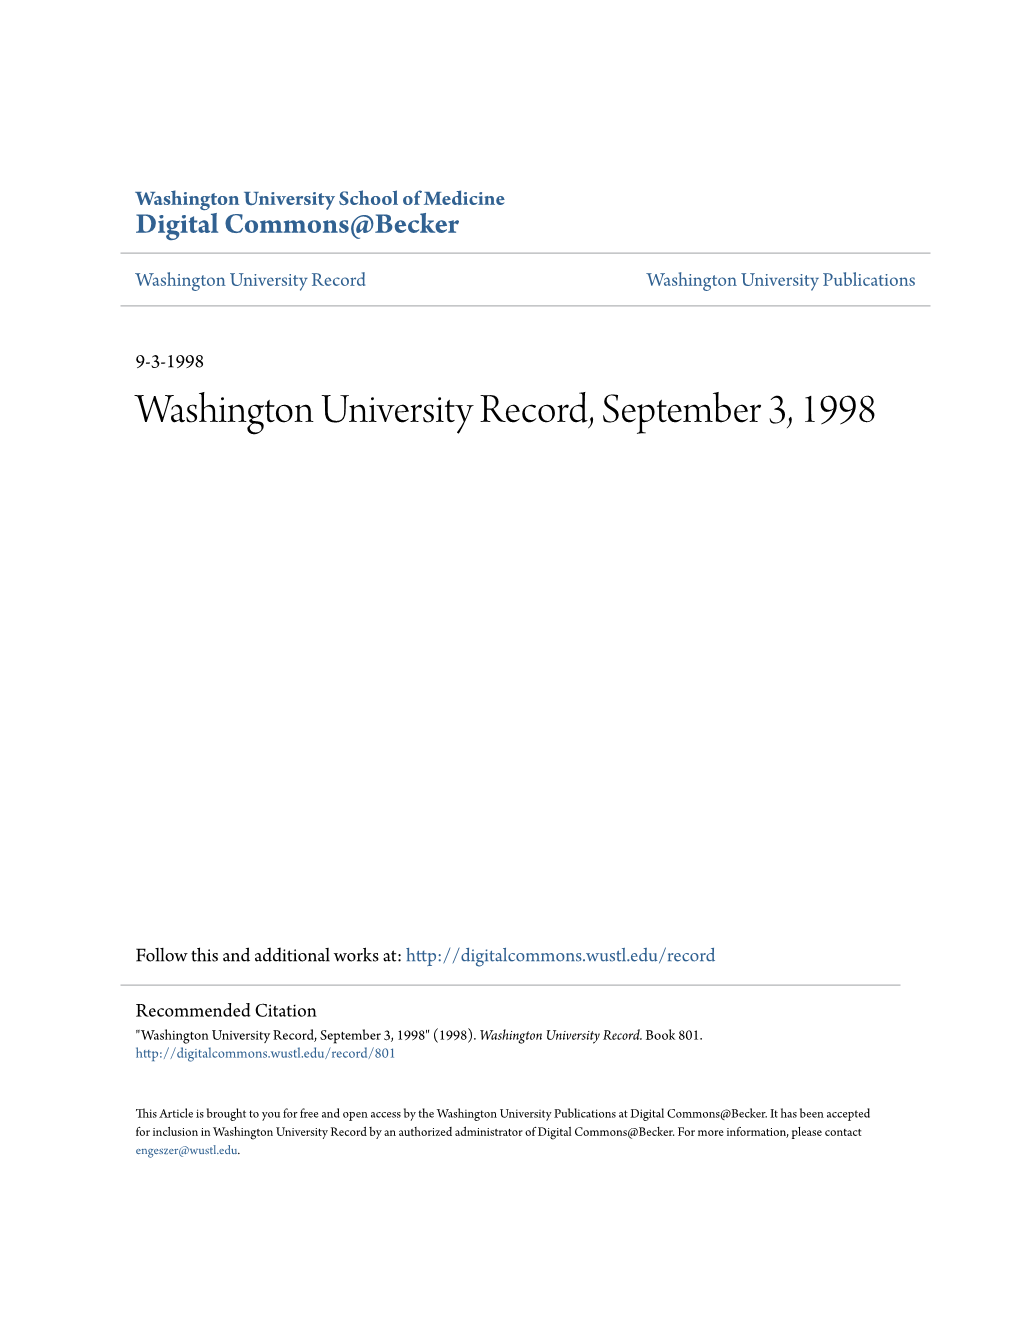 Washington University Record, September 3, 1998